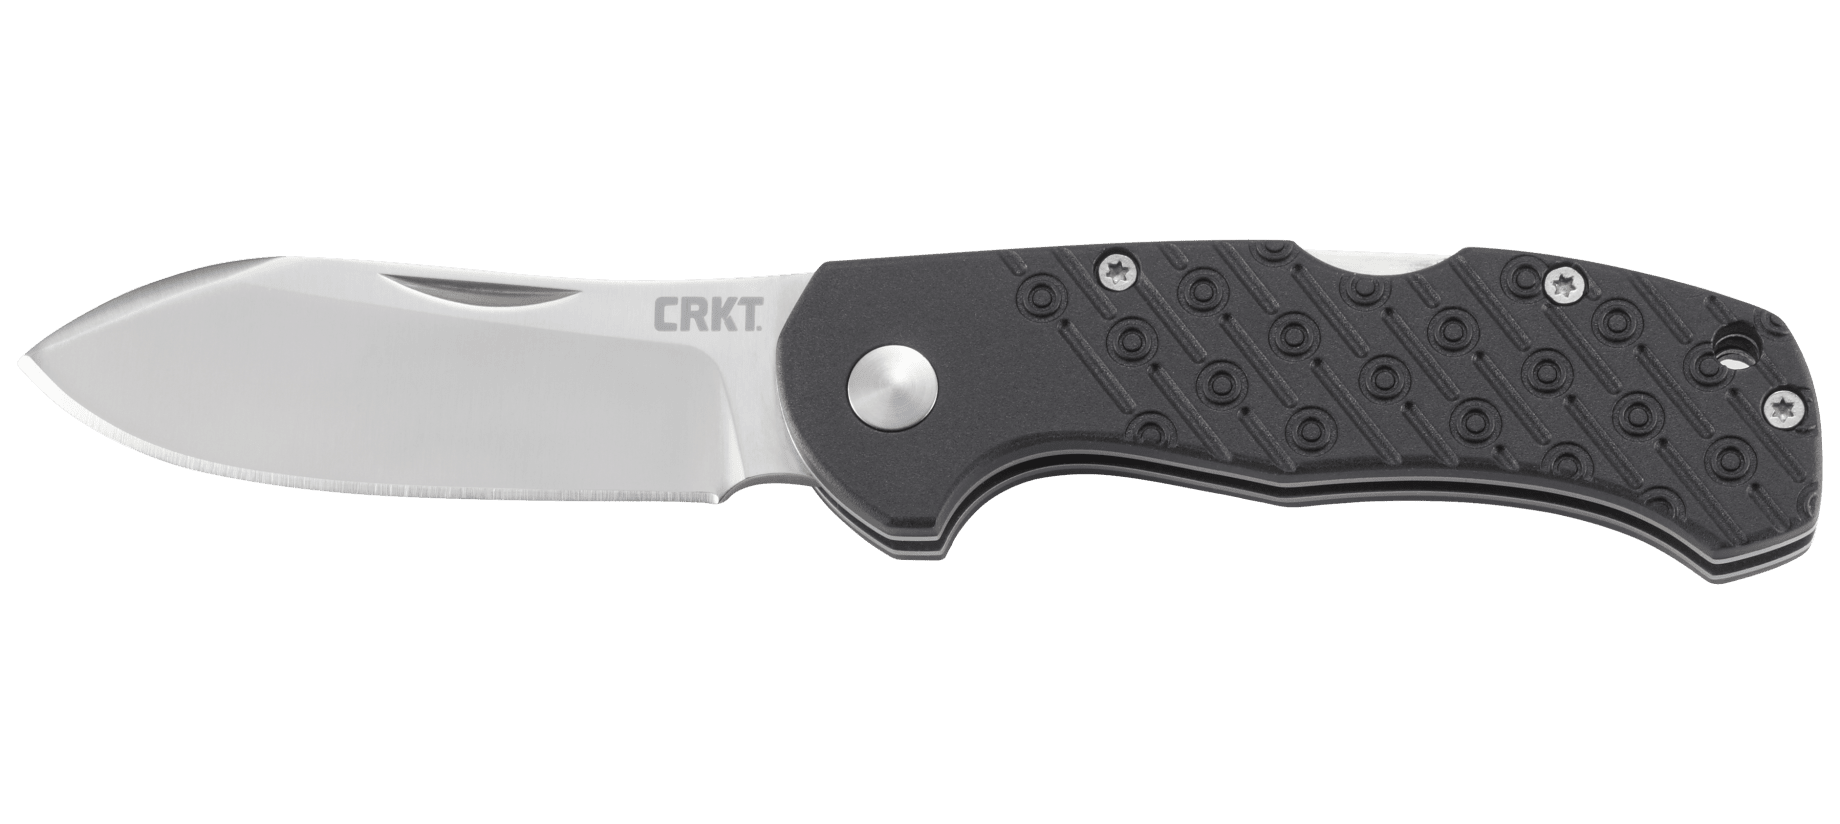 Сталь 8cr13mov. Складной нож CRKT 7430 - Fulcrum™ 2 Compact механизм. Нож CRKT Lockback. Нож CRKT 2425 Scribe.